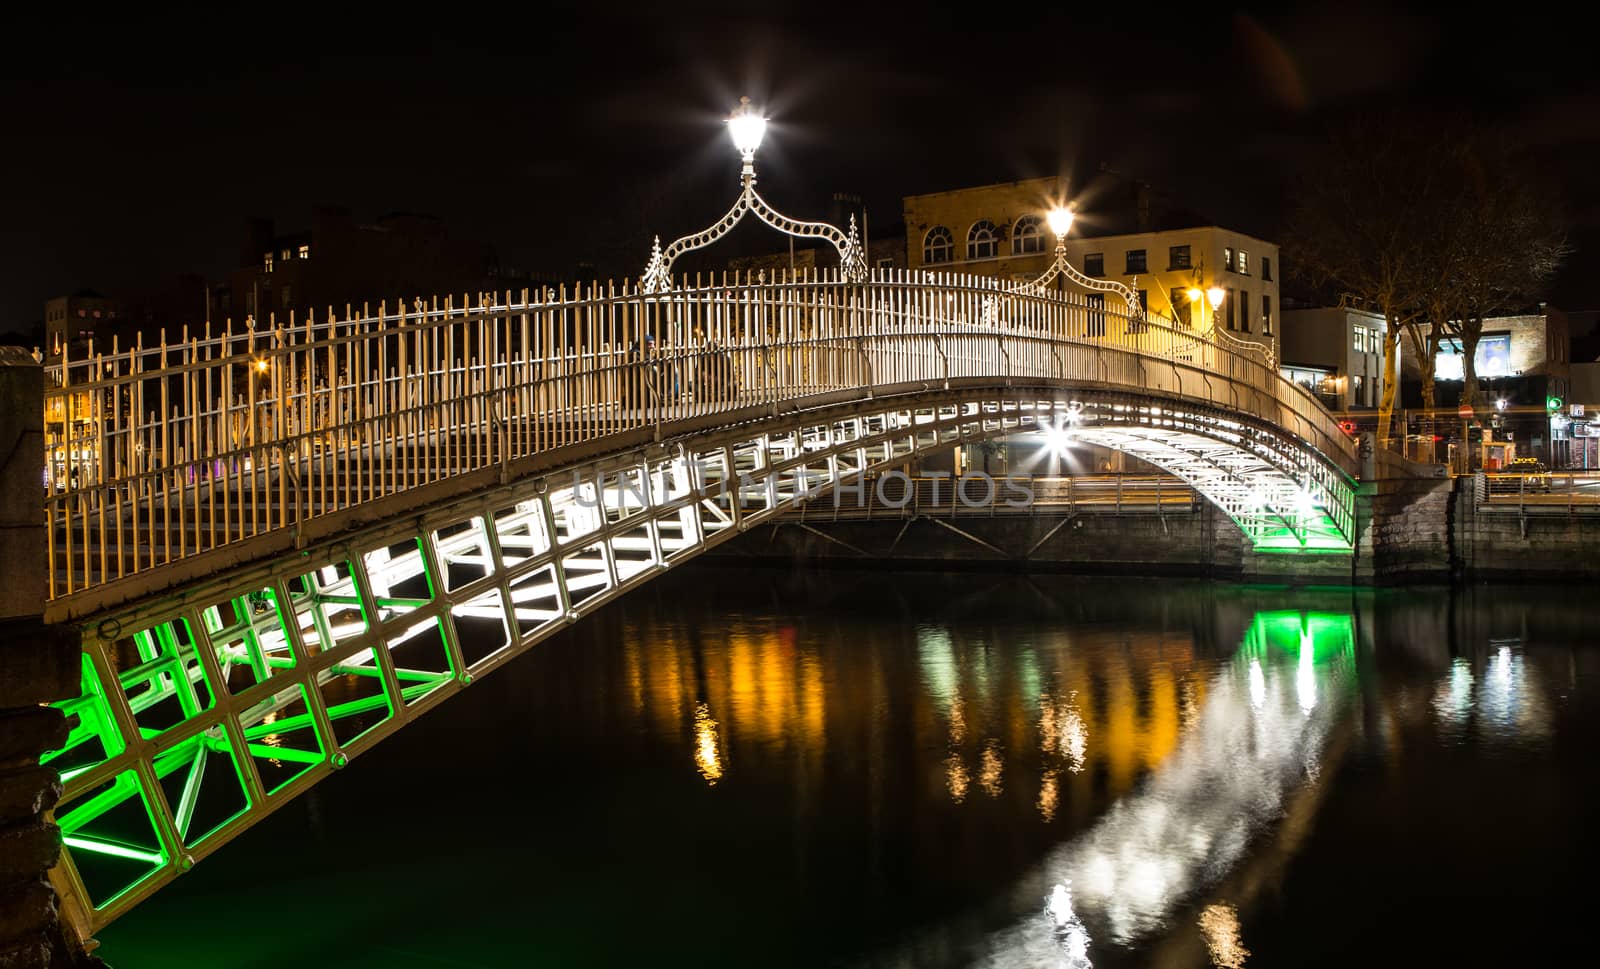 Night picture of the river liffey and bridges Dublin Ireland Ha penny bridge